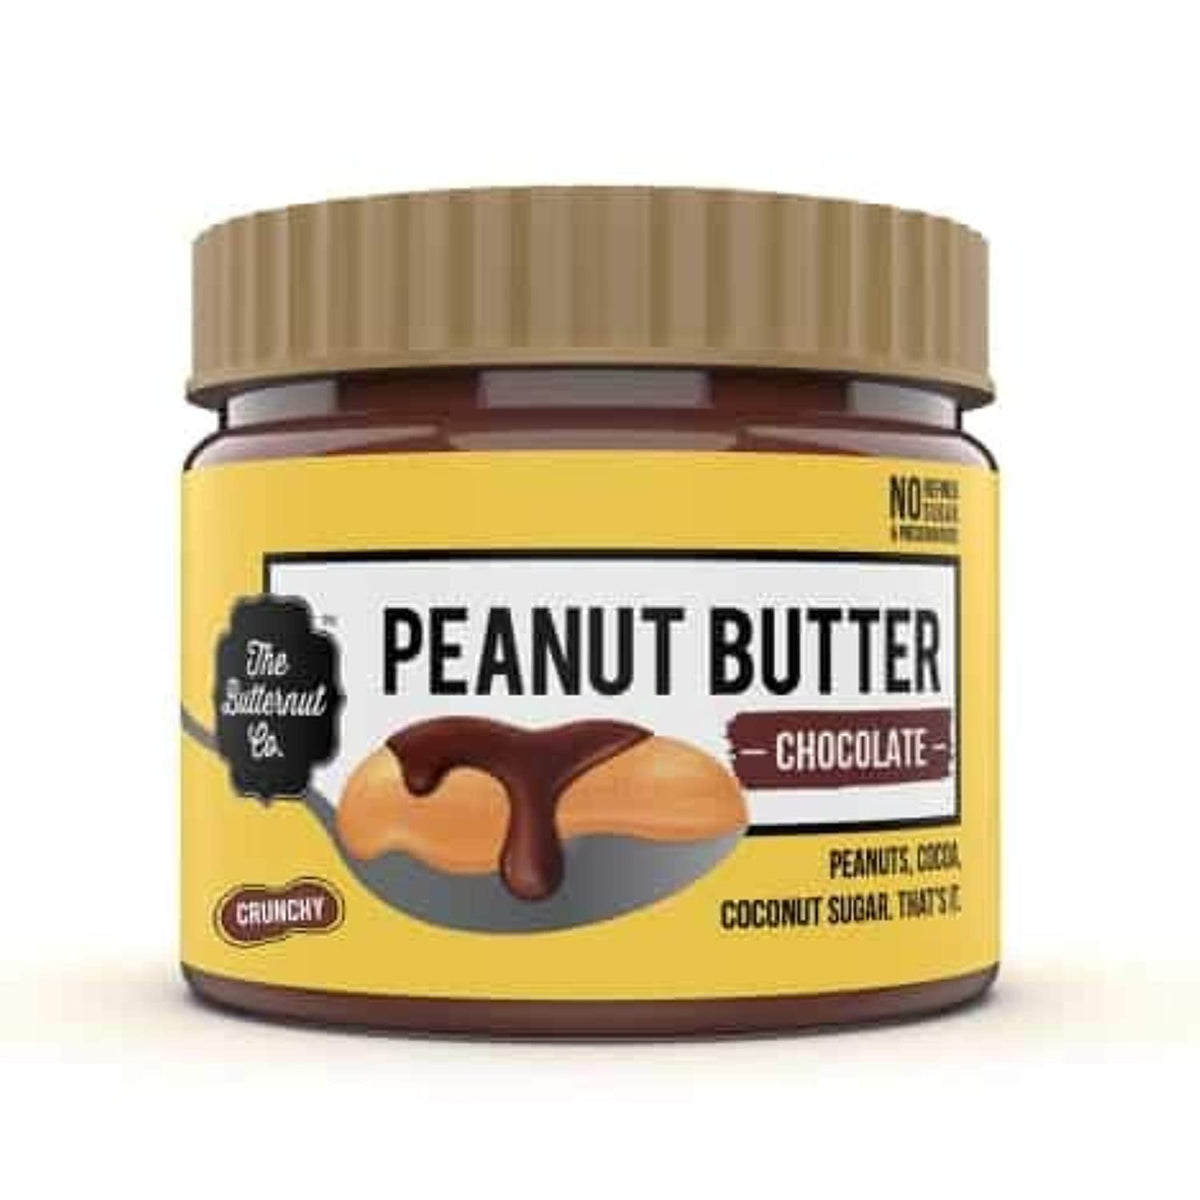 The Buttenut Co. Chocolate Peanut Butter Crunchy 340g - High Protein, No Salt, Cholesterol-Free, Gluten-Free Vegan Nut Butter - 100% Pure Roasted Peanut